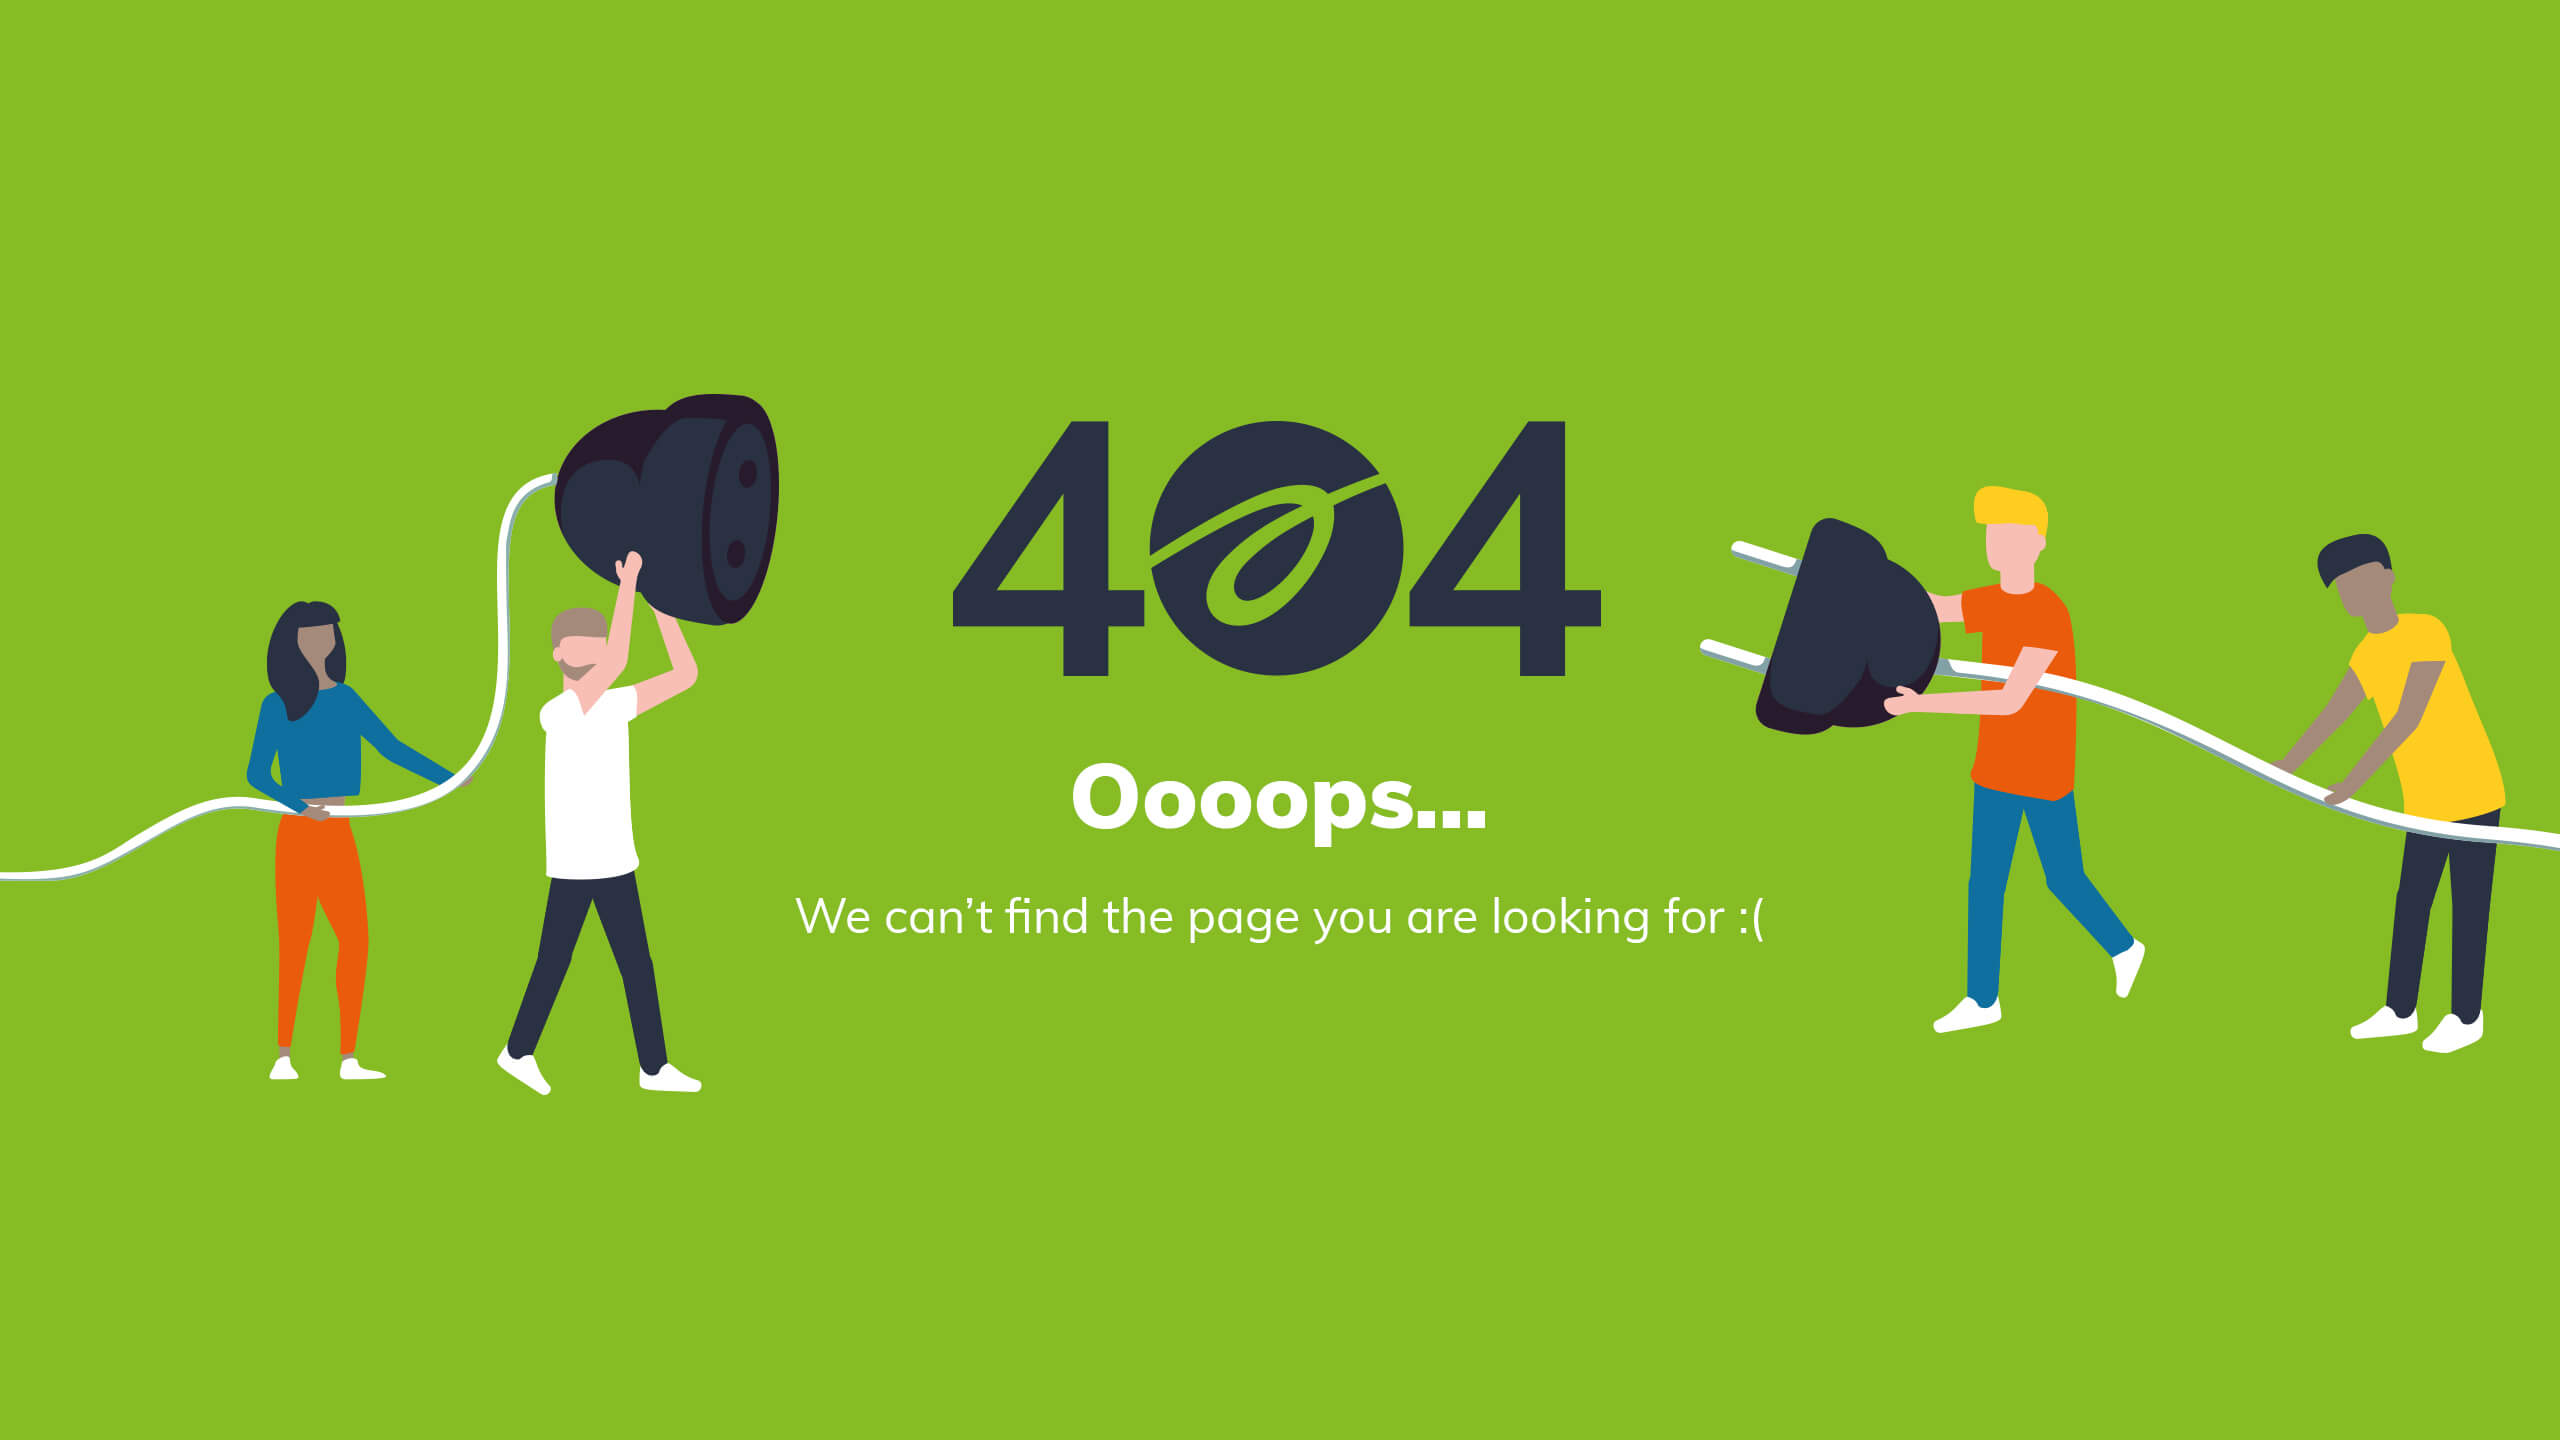 iofc uk 404